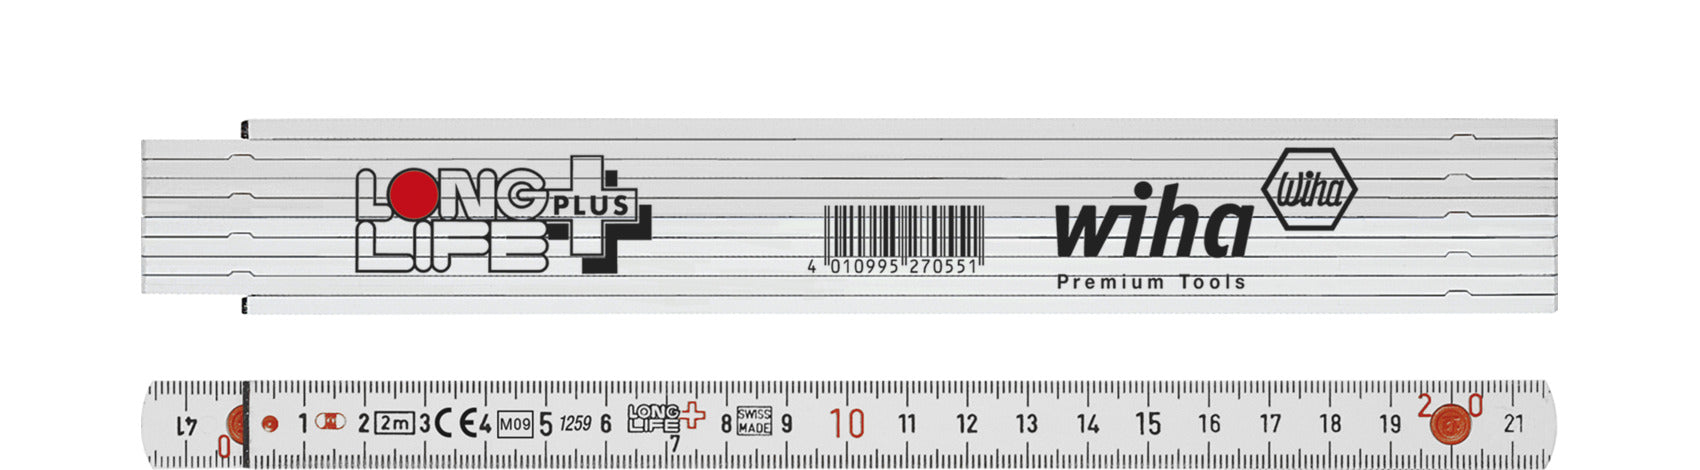 Wiha 27055 Folding Ruler 2m Yellow Metric Plastic Longlife Plus